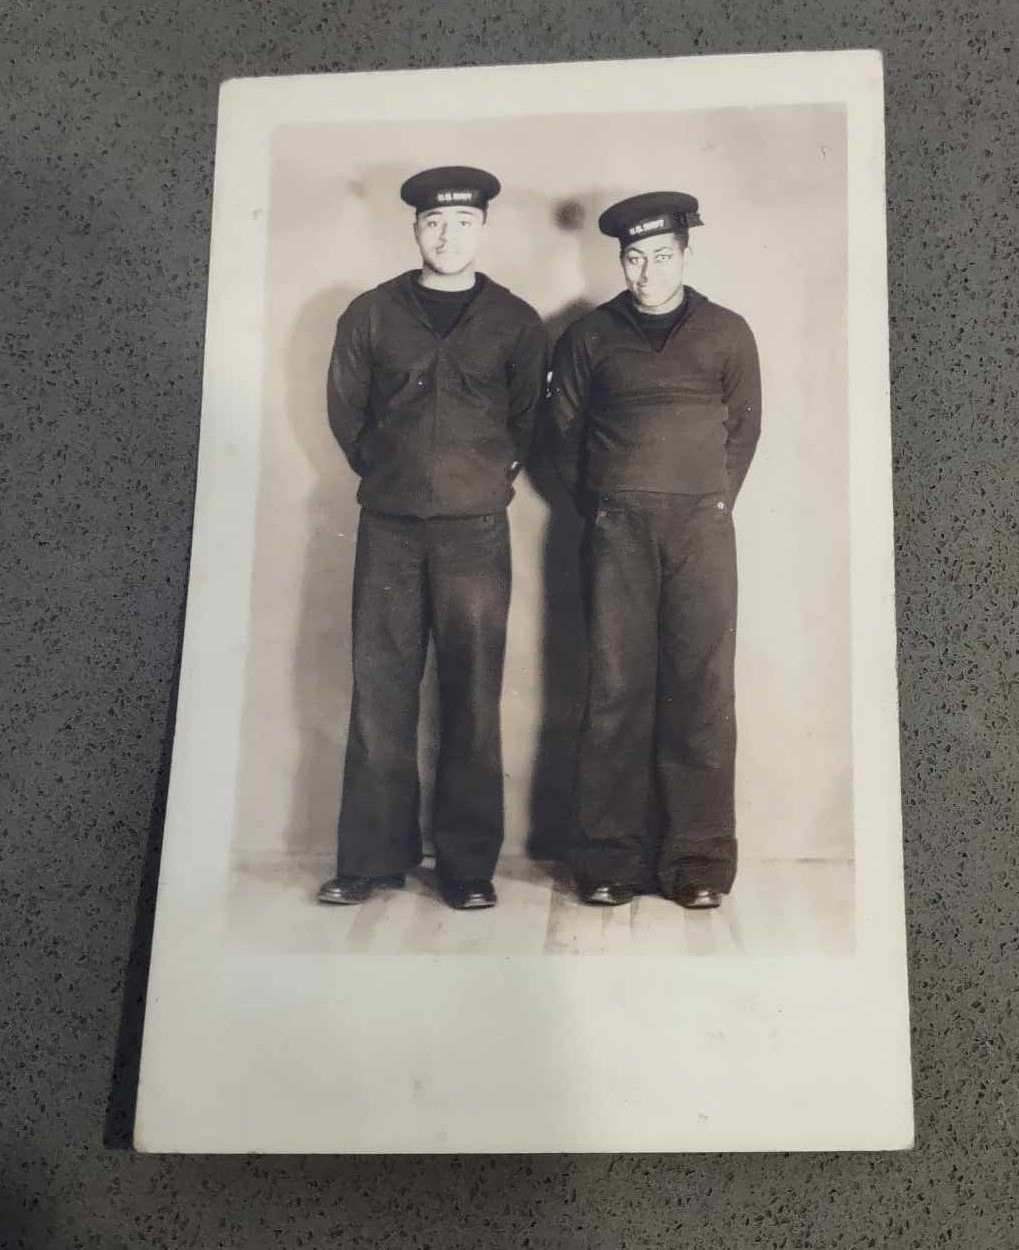 Grandpa on the left in Navy uniform